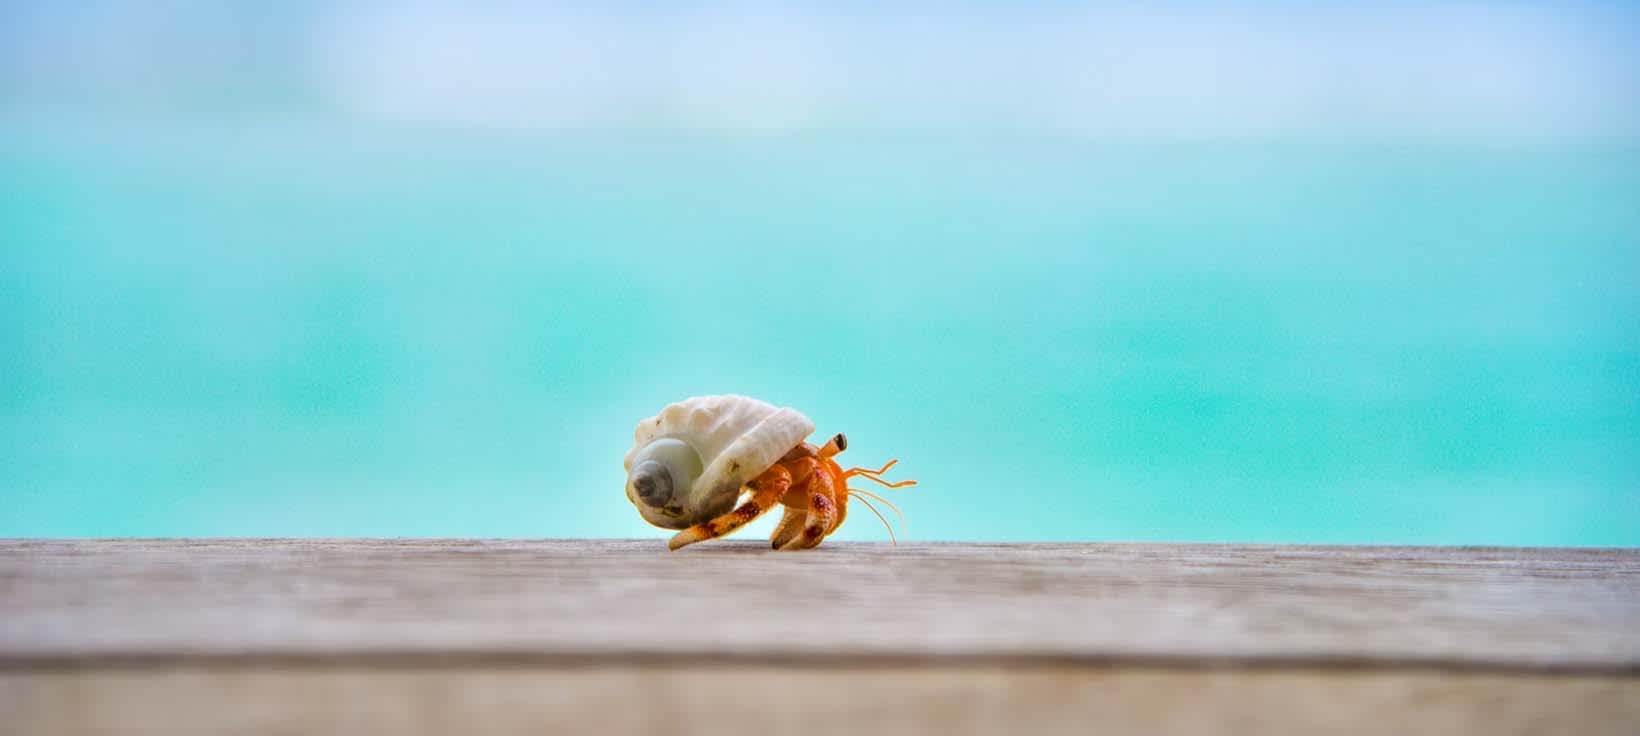 Crabe - photo de  Ahmed Sobah - Unsplash